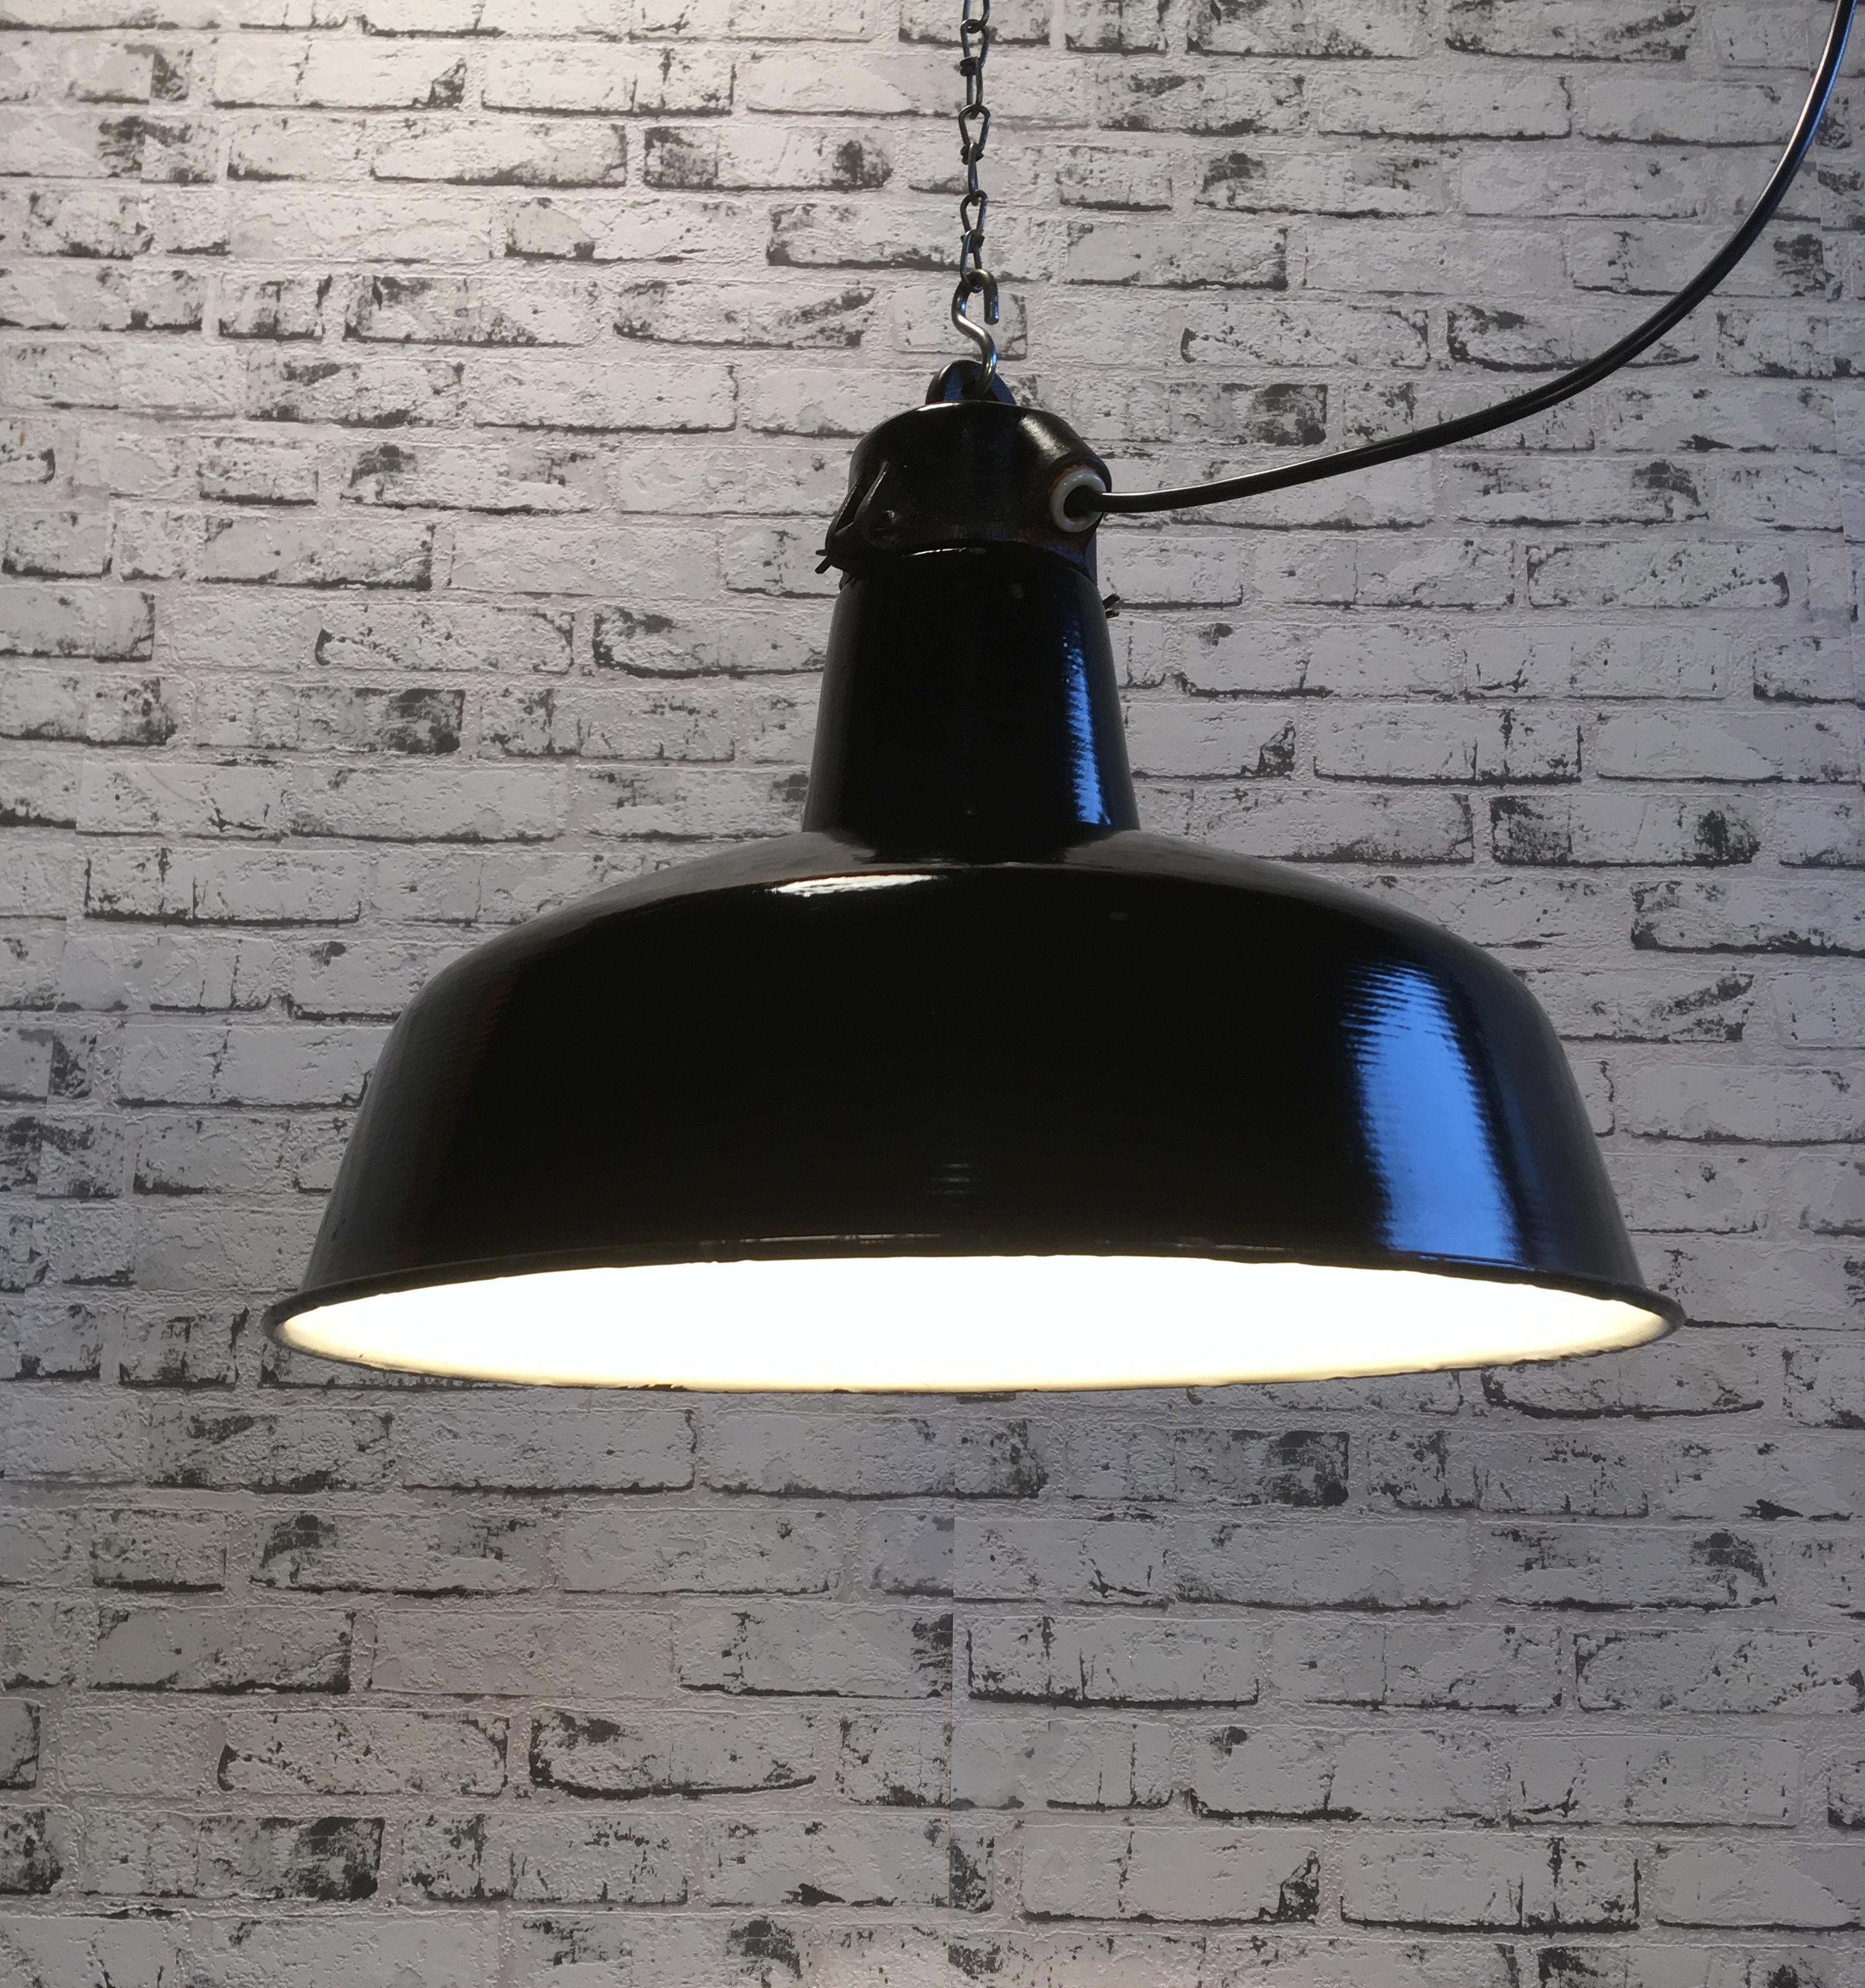 20th Century Industrial Black Enamel Factory Hanging Lamp, 1950s